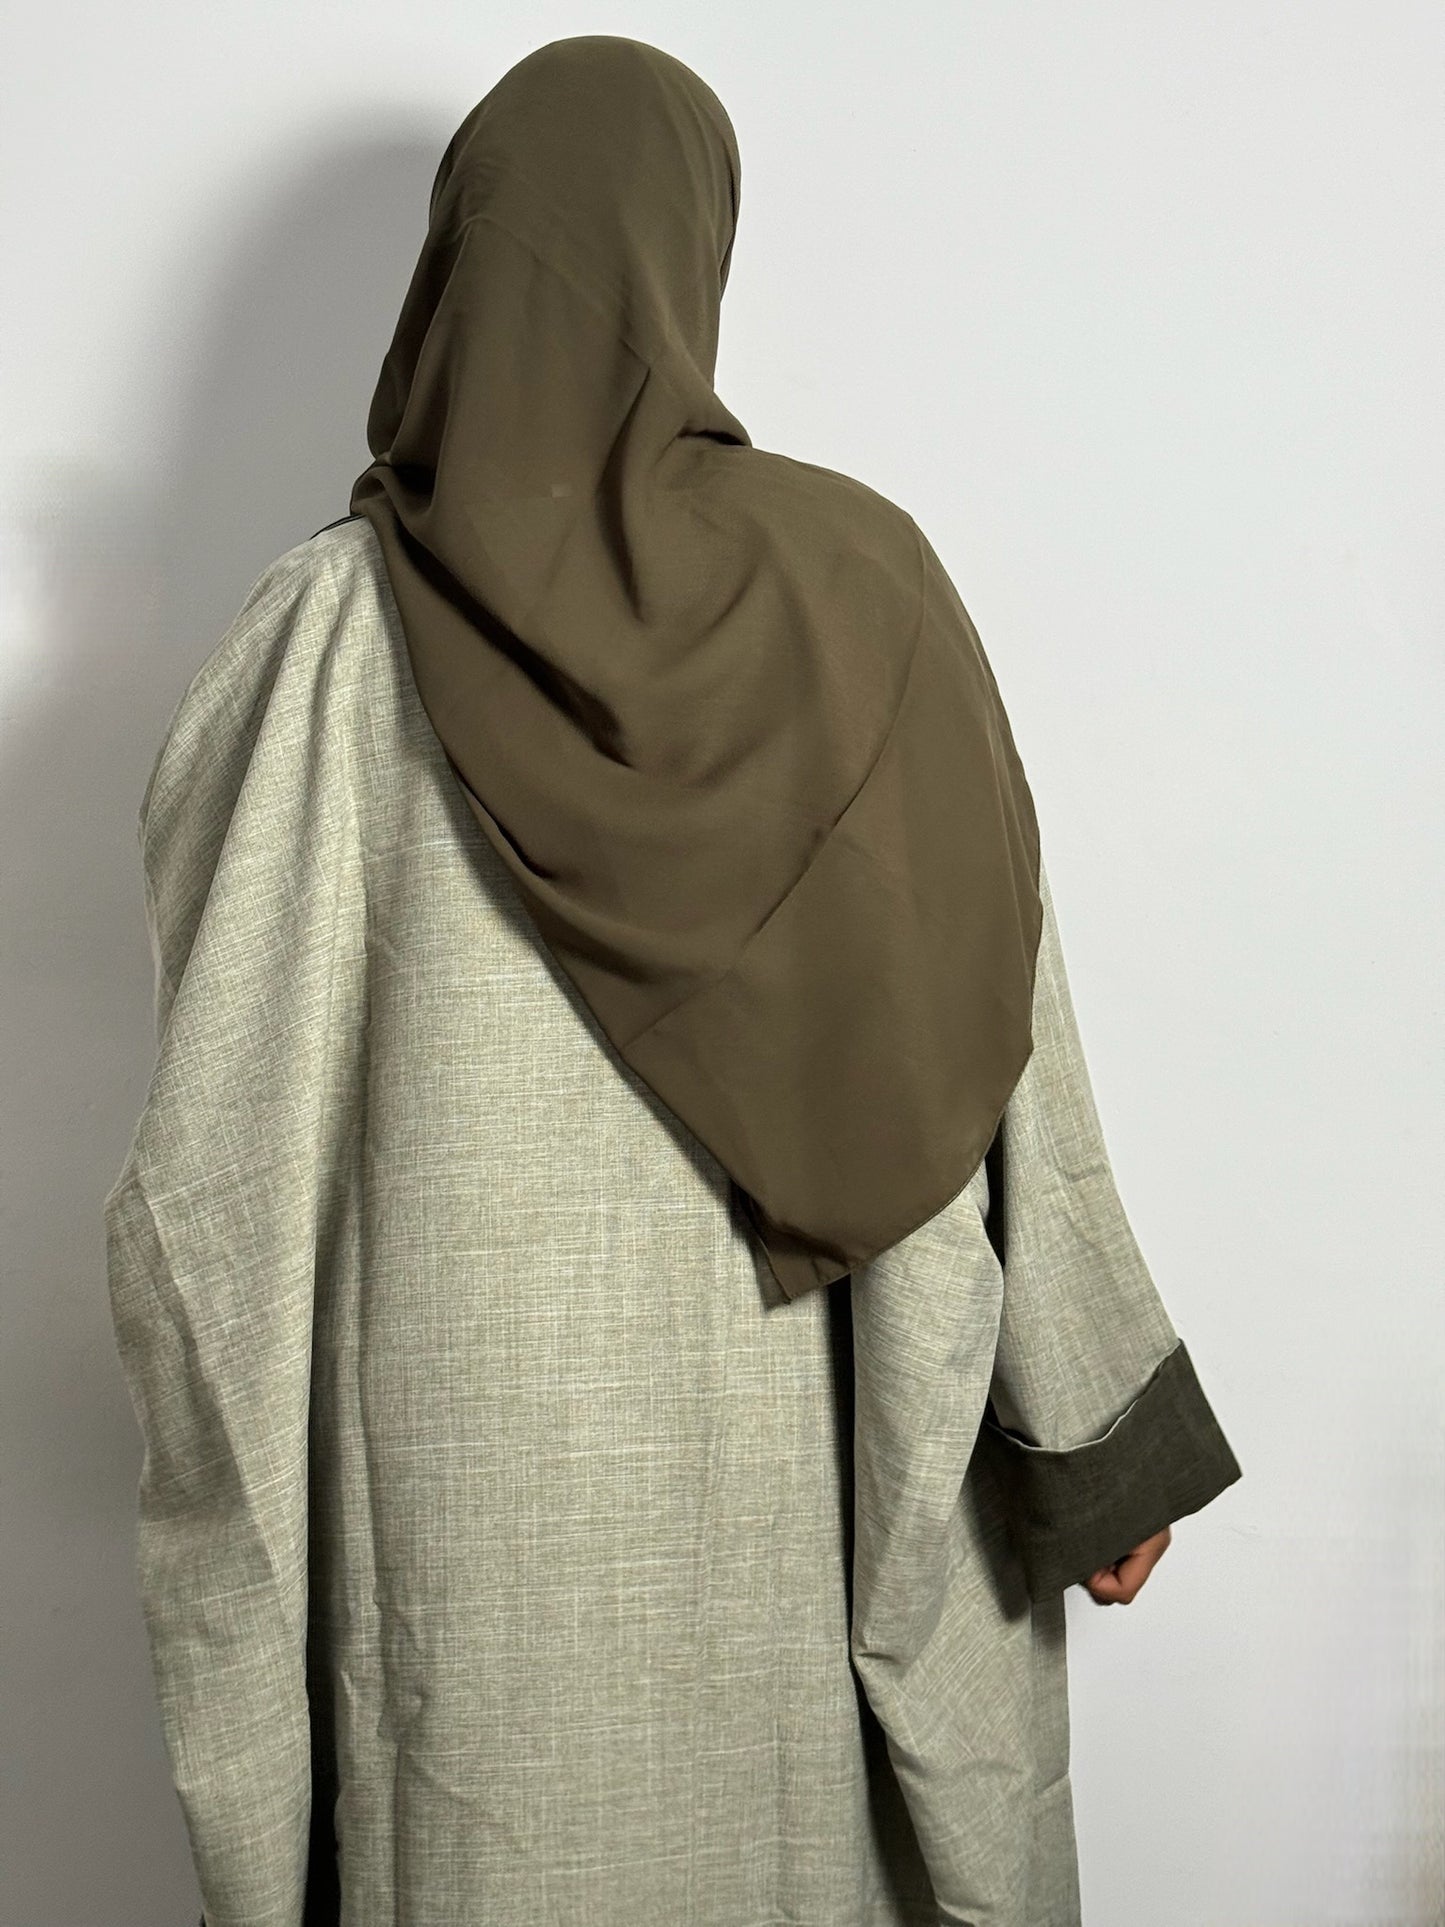 The Reversible Abaya